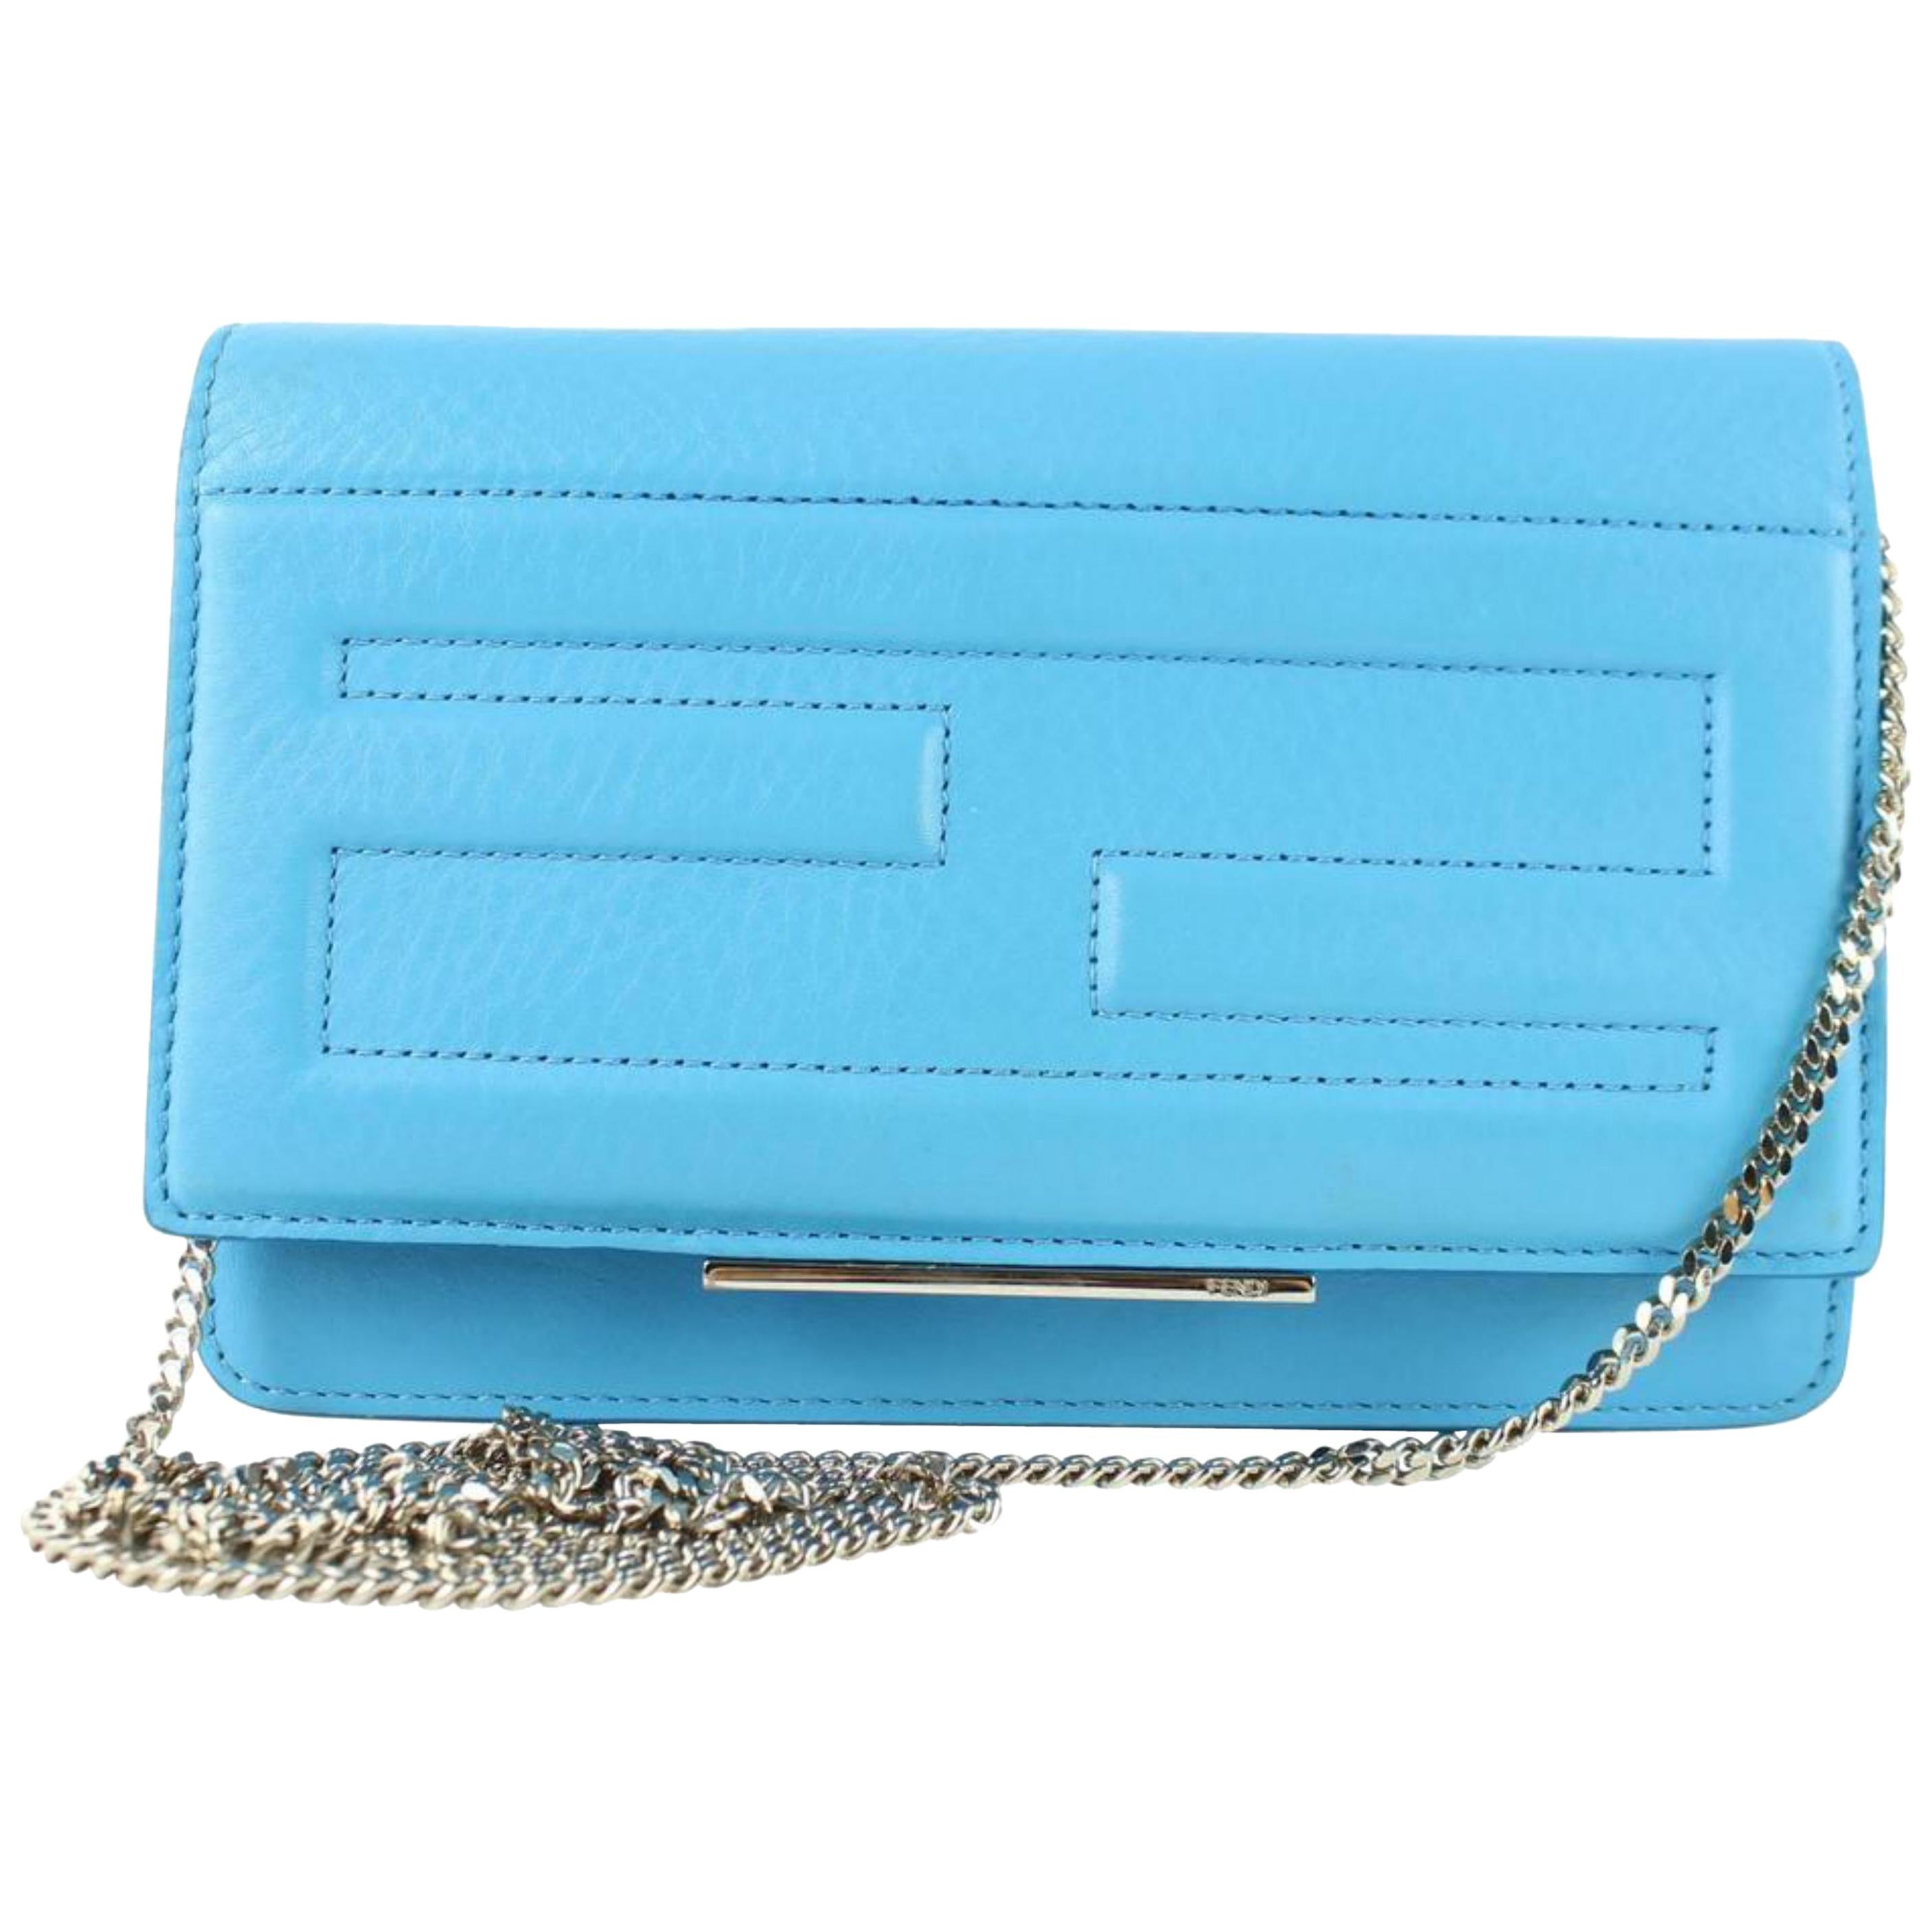 Fendi Wallet on Chain Vitello Tube Flap 3fz0911 Blue Leather Cross Body Bag For Sale